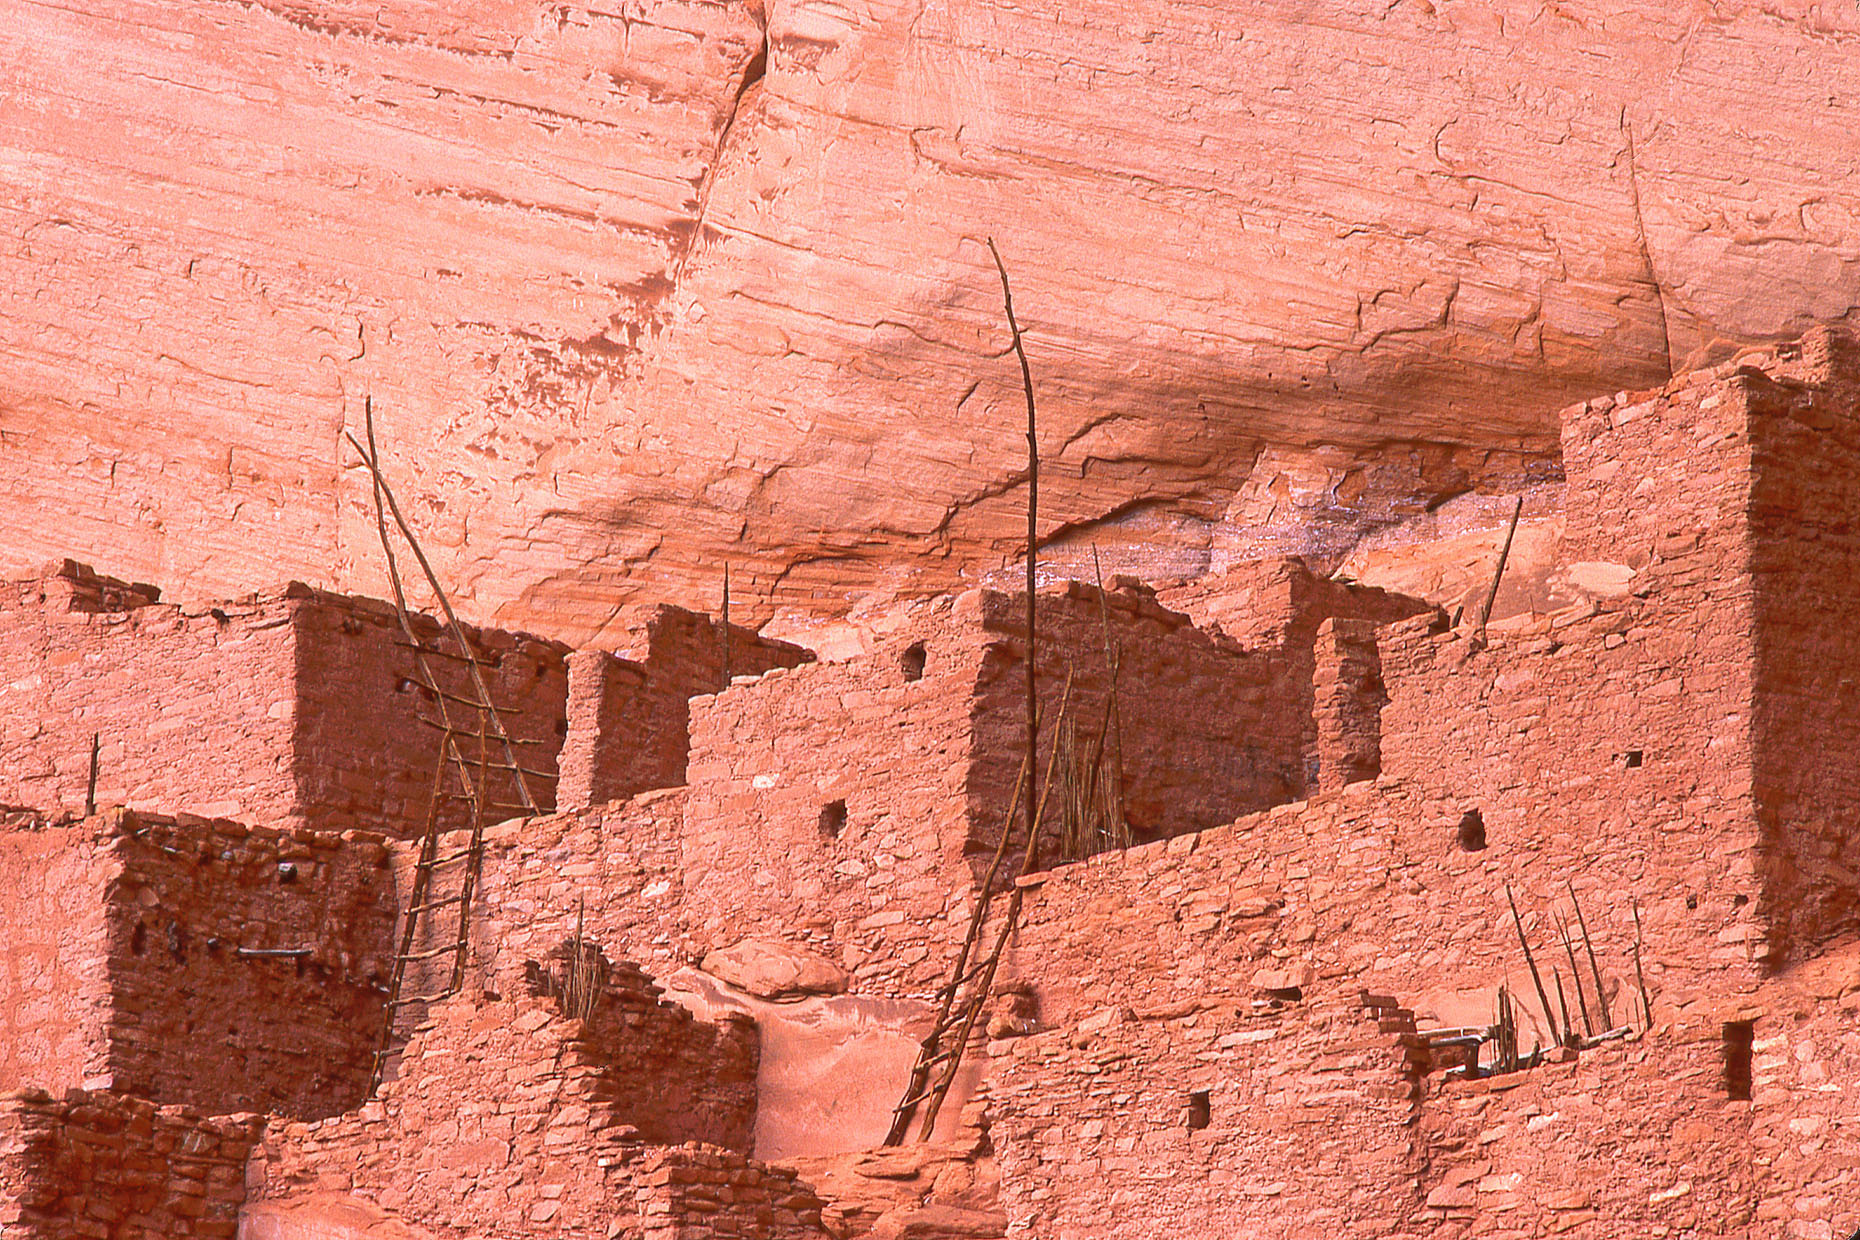 Betatakin cliff dwelling, John Annerino, Navajo National Monument, AZ